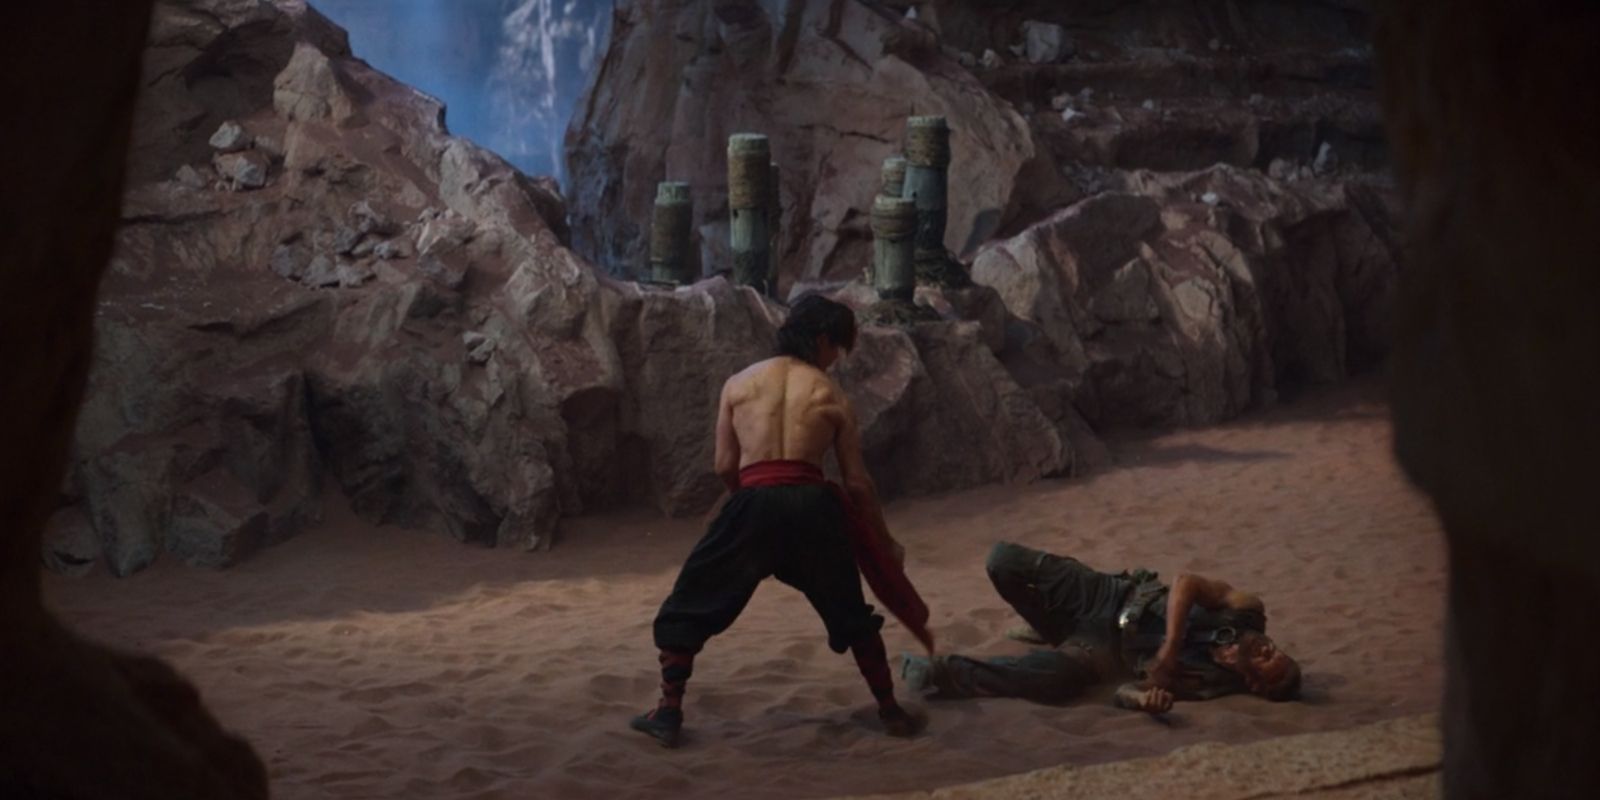 Kano knocked down by Liu Kang in Mortal Kombat 2021